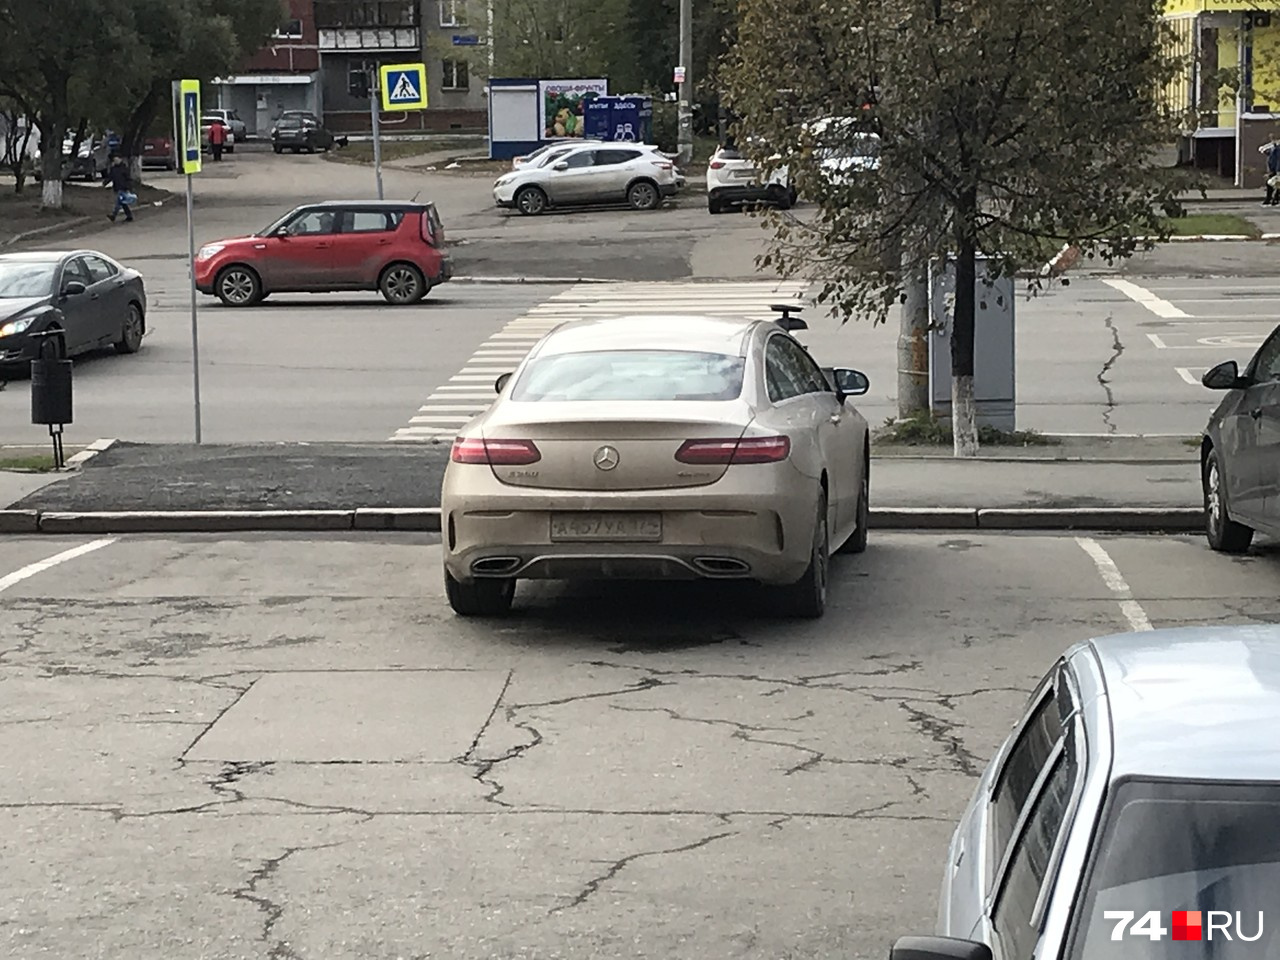 Дама на Mercedes явно испытывает сложности с парковкой точно по линиям